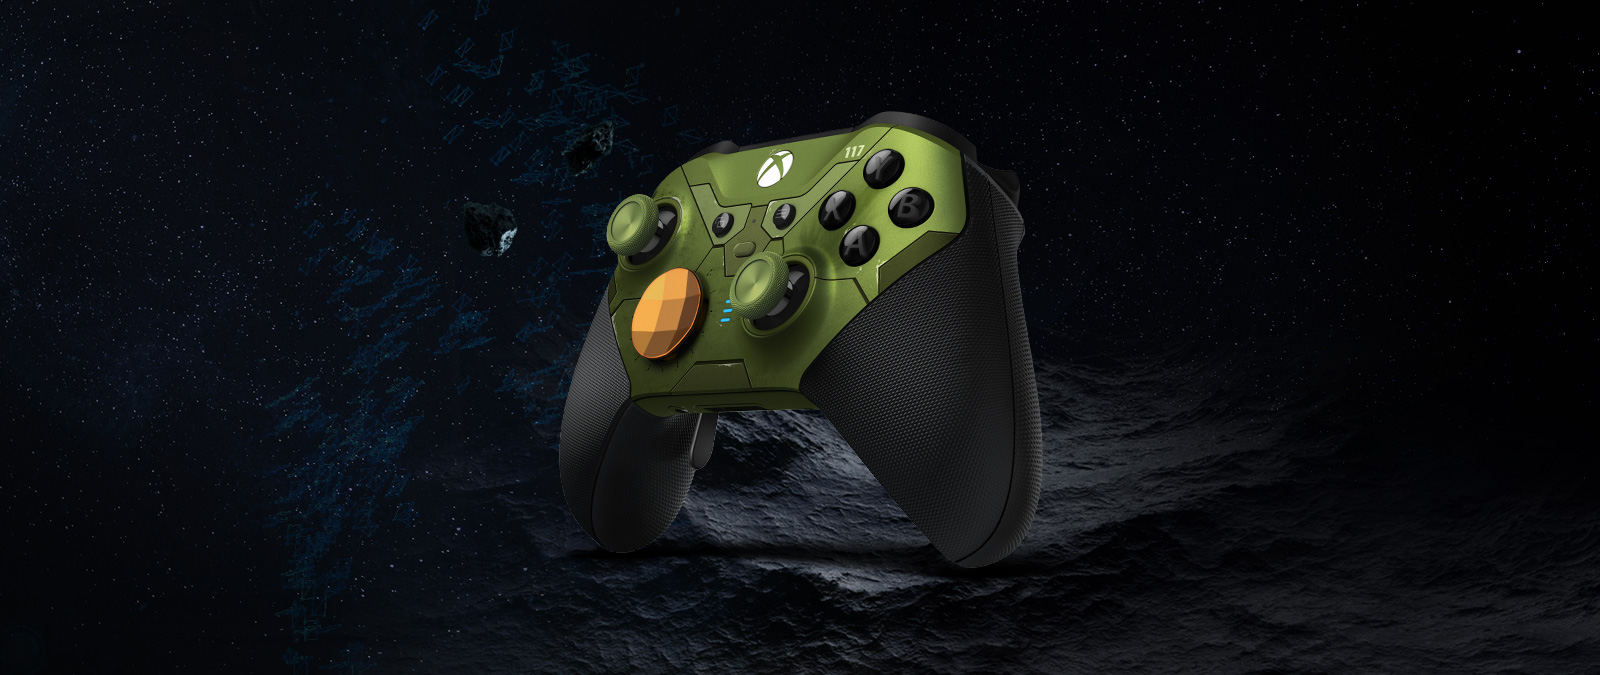 Xbox Elite 無線控制器 Series 2 - Halo Infinite 限量版飄浮在太空的右側畫面